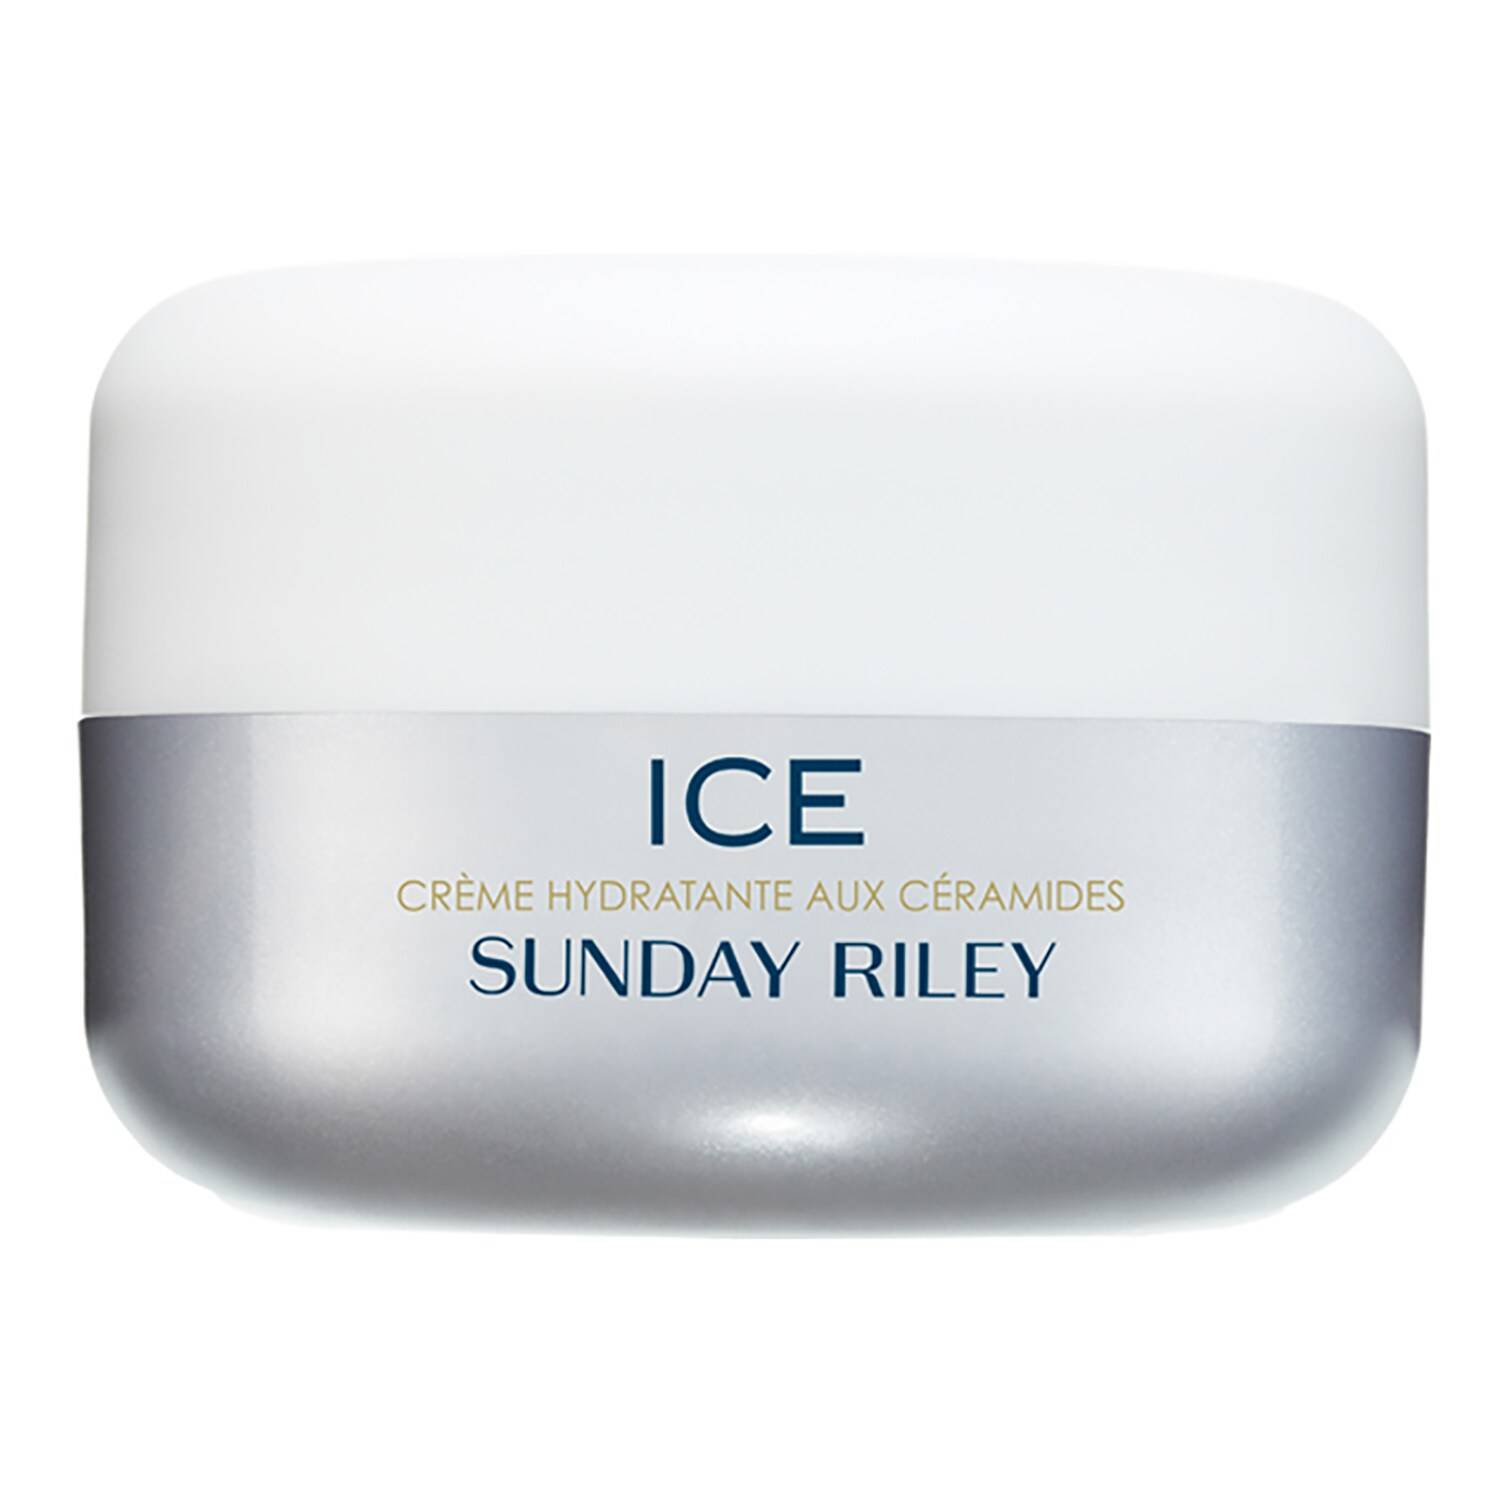 SUNDAY RILEY ICE - Ceramide Moisturizing Cream 15g